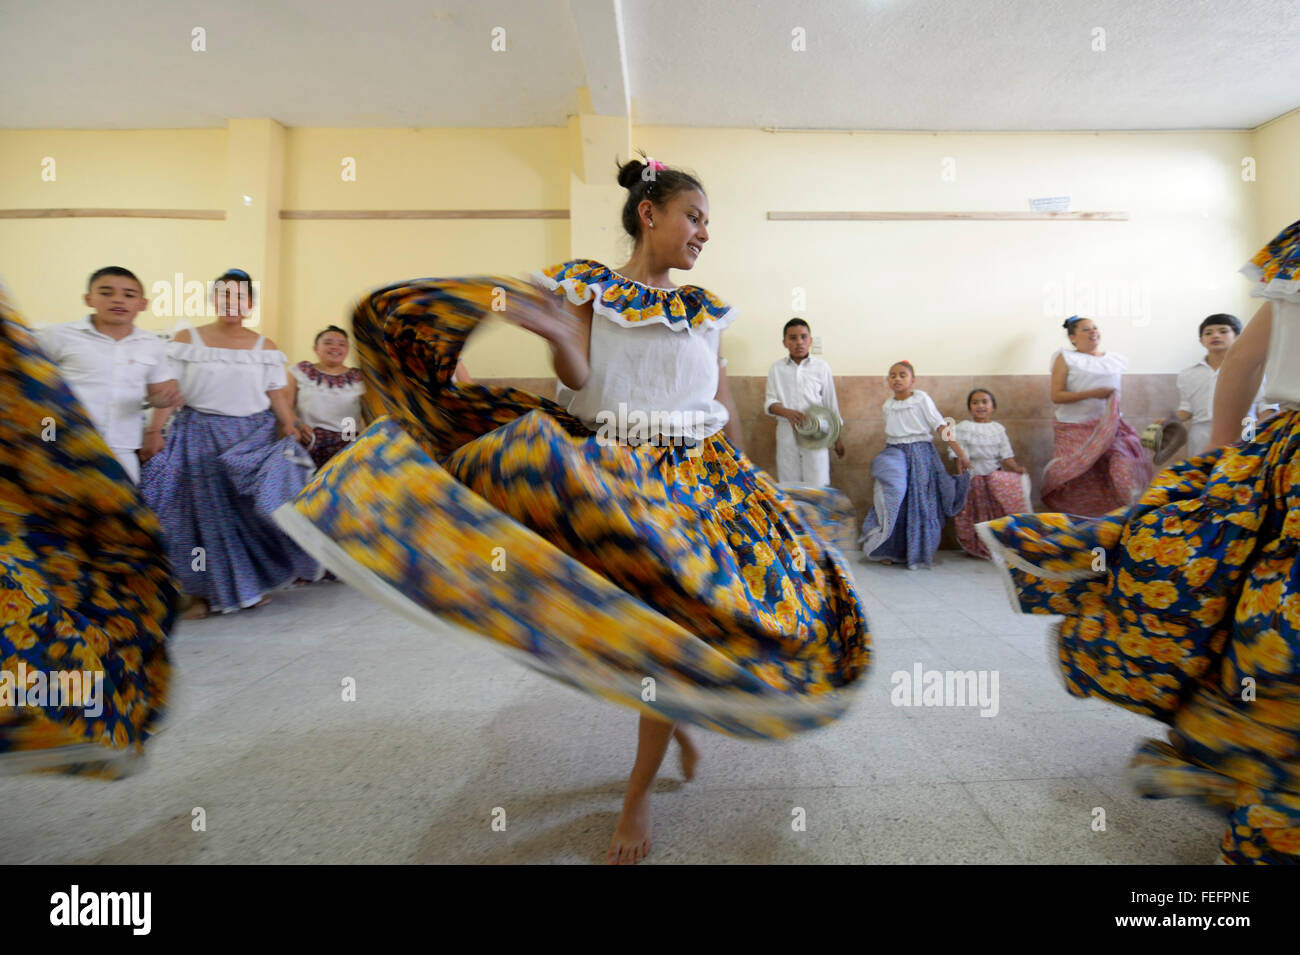 Chica bailando, volando falda, grupo de baile, danza folclórica, danza tradicional, Barrio San Martín, Bogotá, Colombia Foto de stock